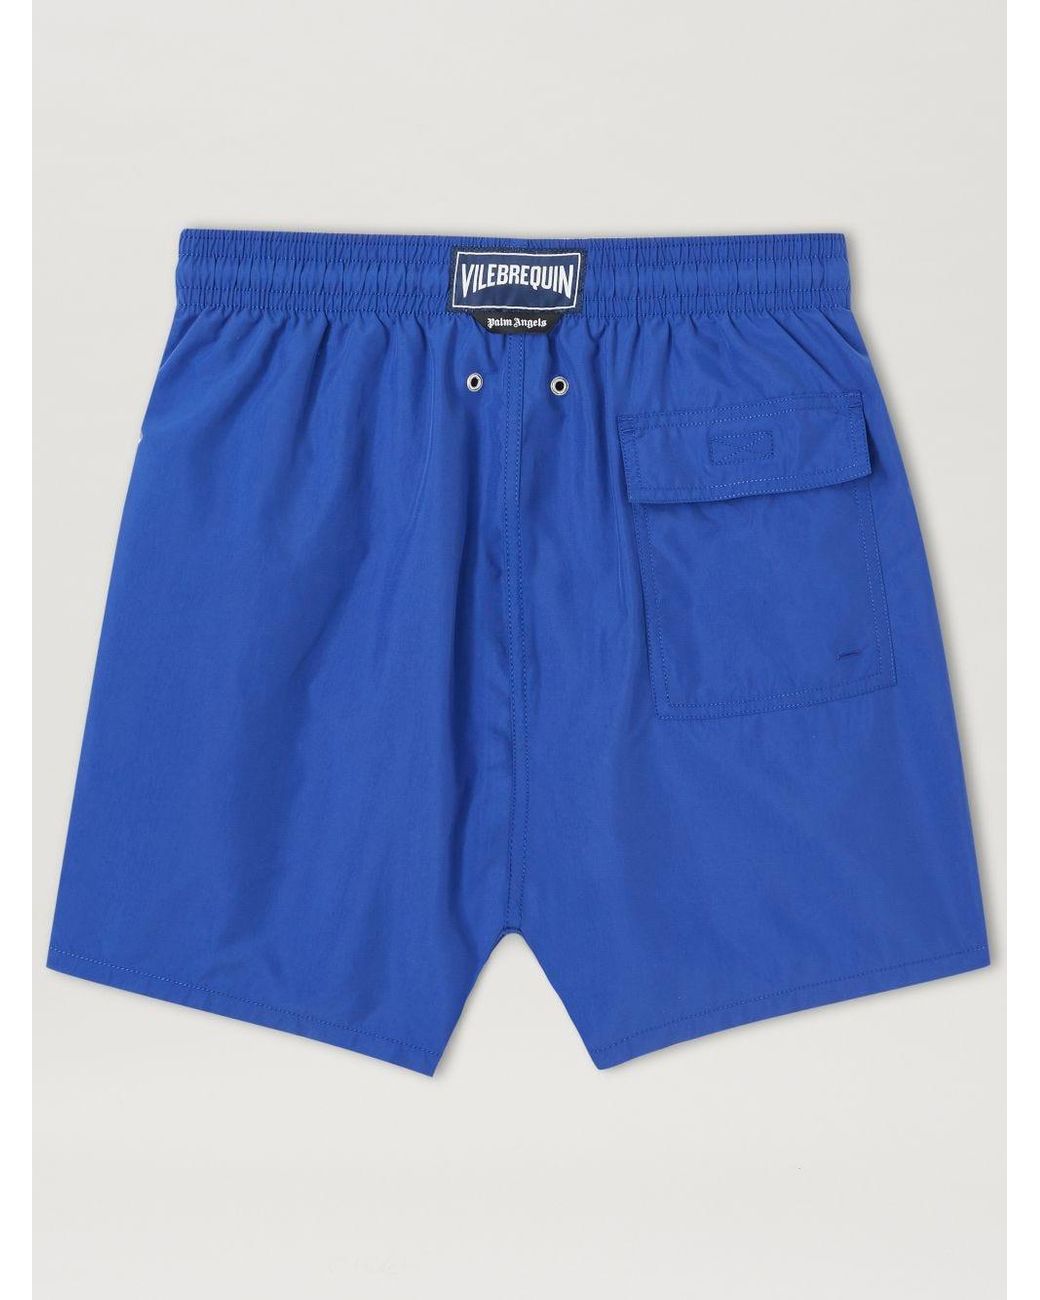 Palm Angels X Vilebrequin Blue Swim Shorts for Men | Lyst